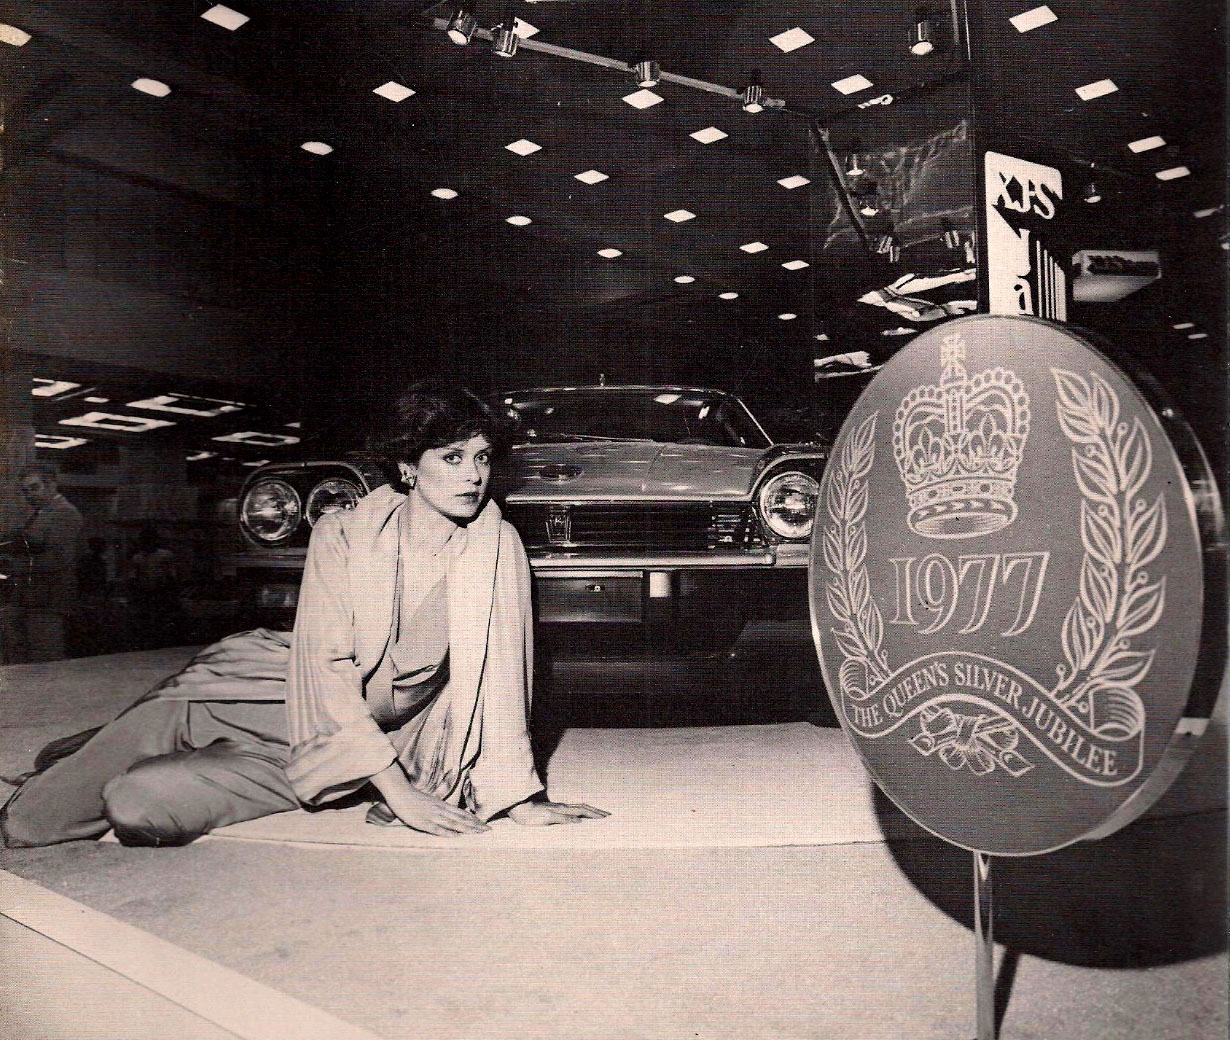 1977 auto show